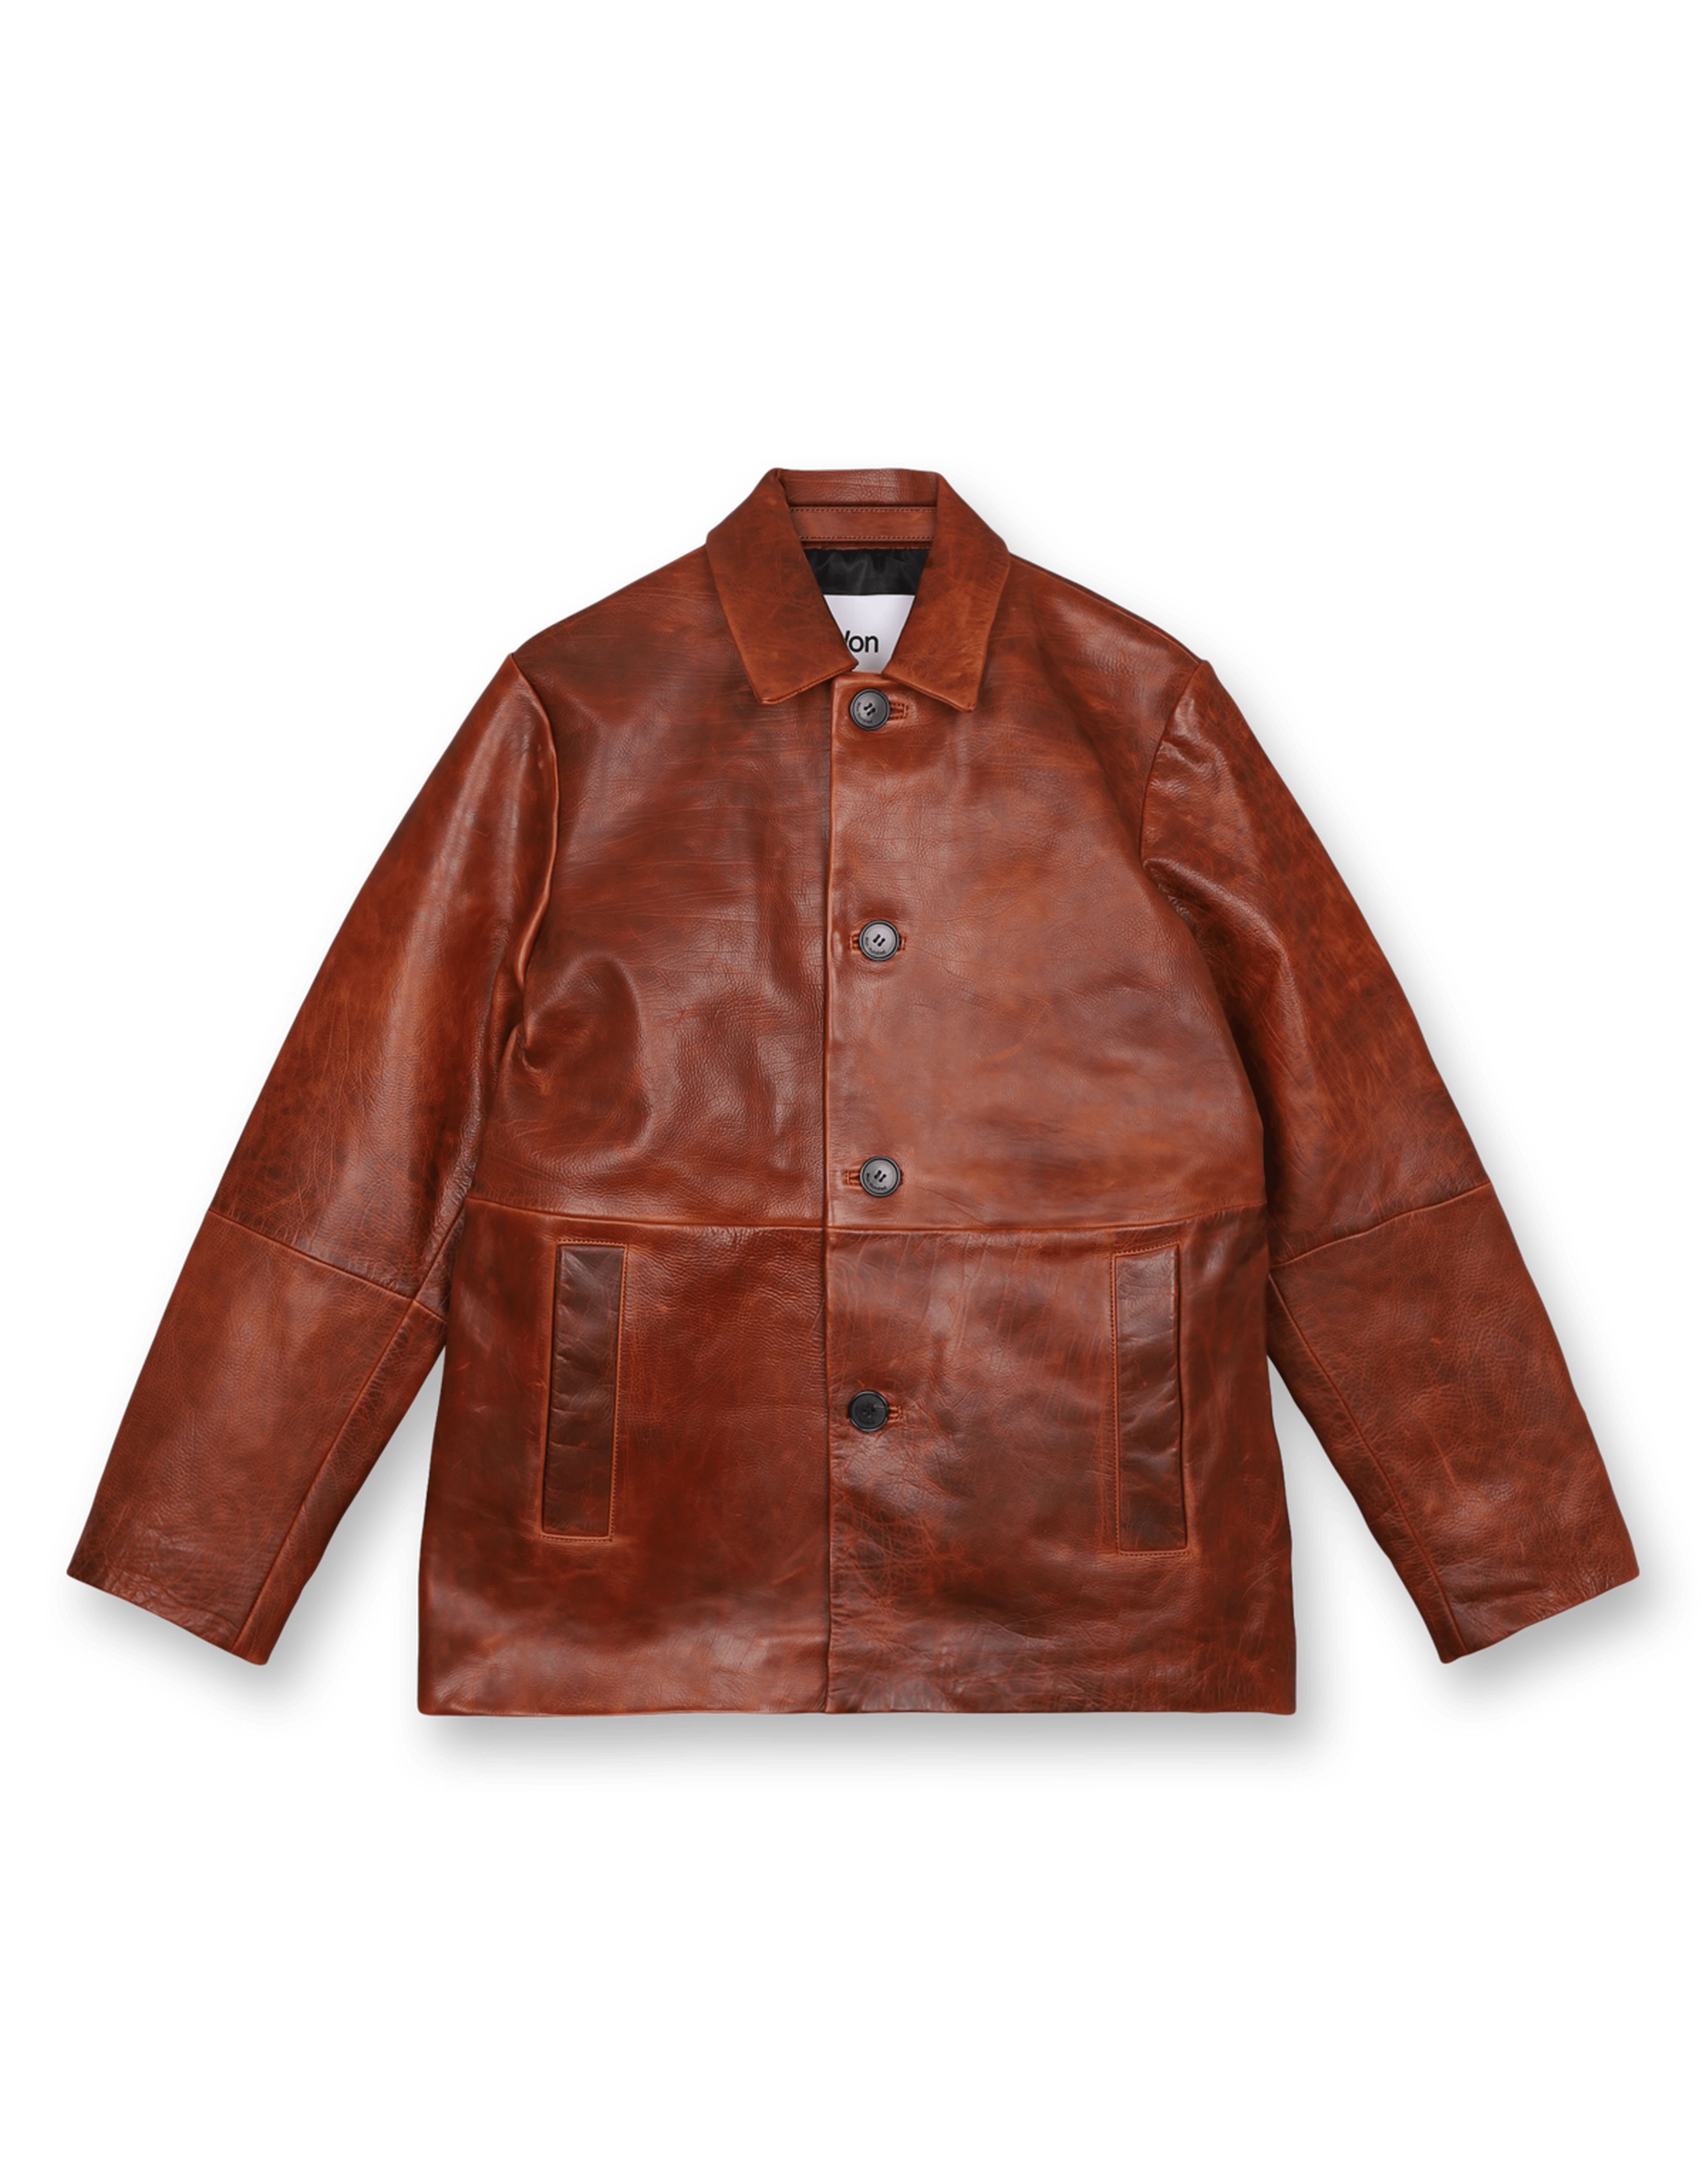 Damian Leather Jacket